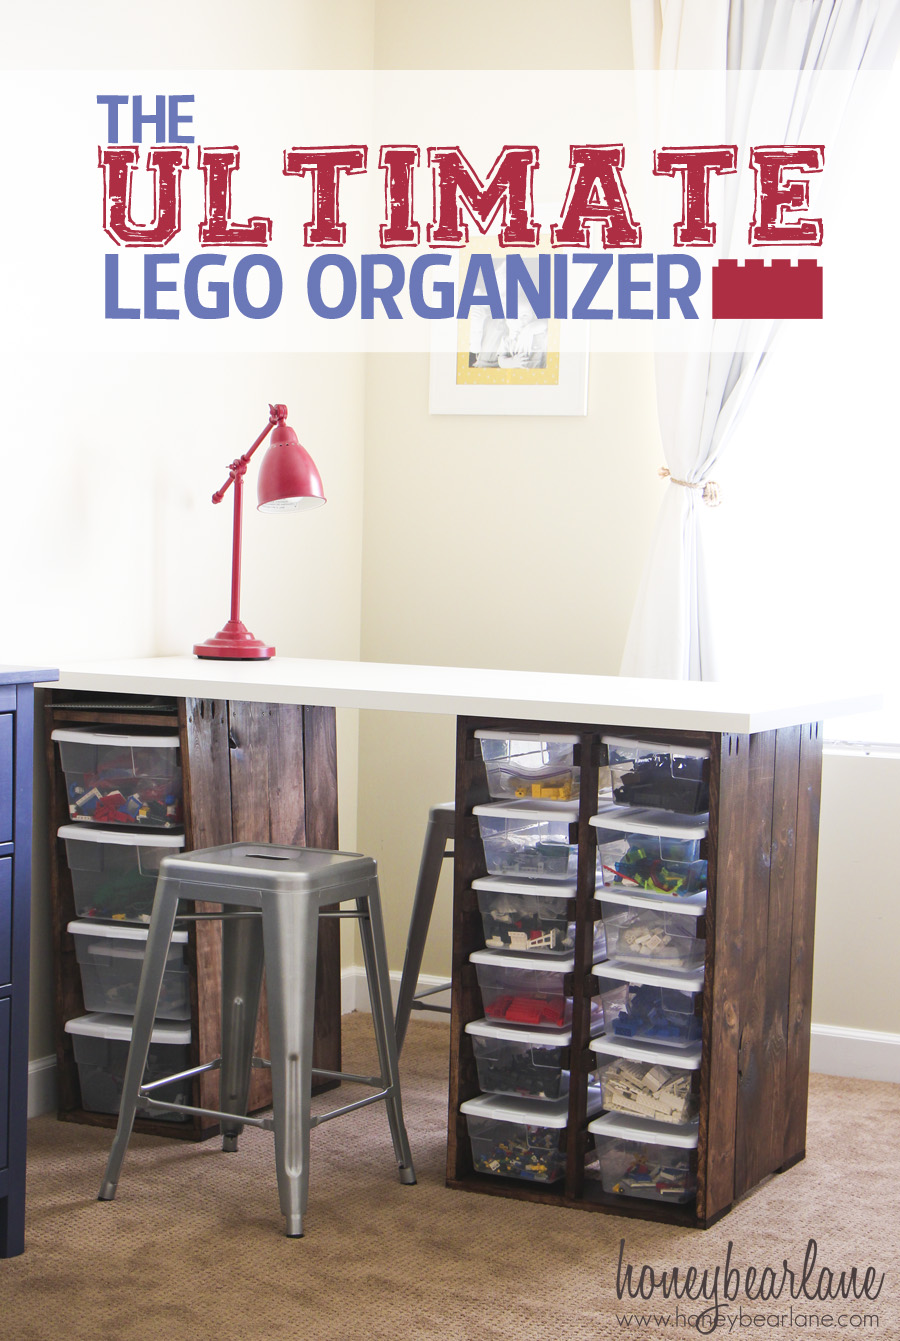 The Ultimate Lego Organizer - Honeybear